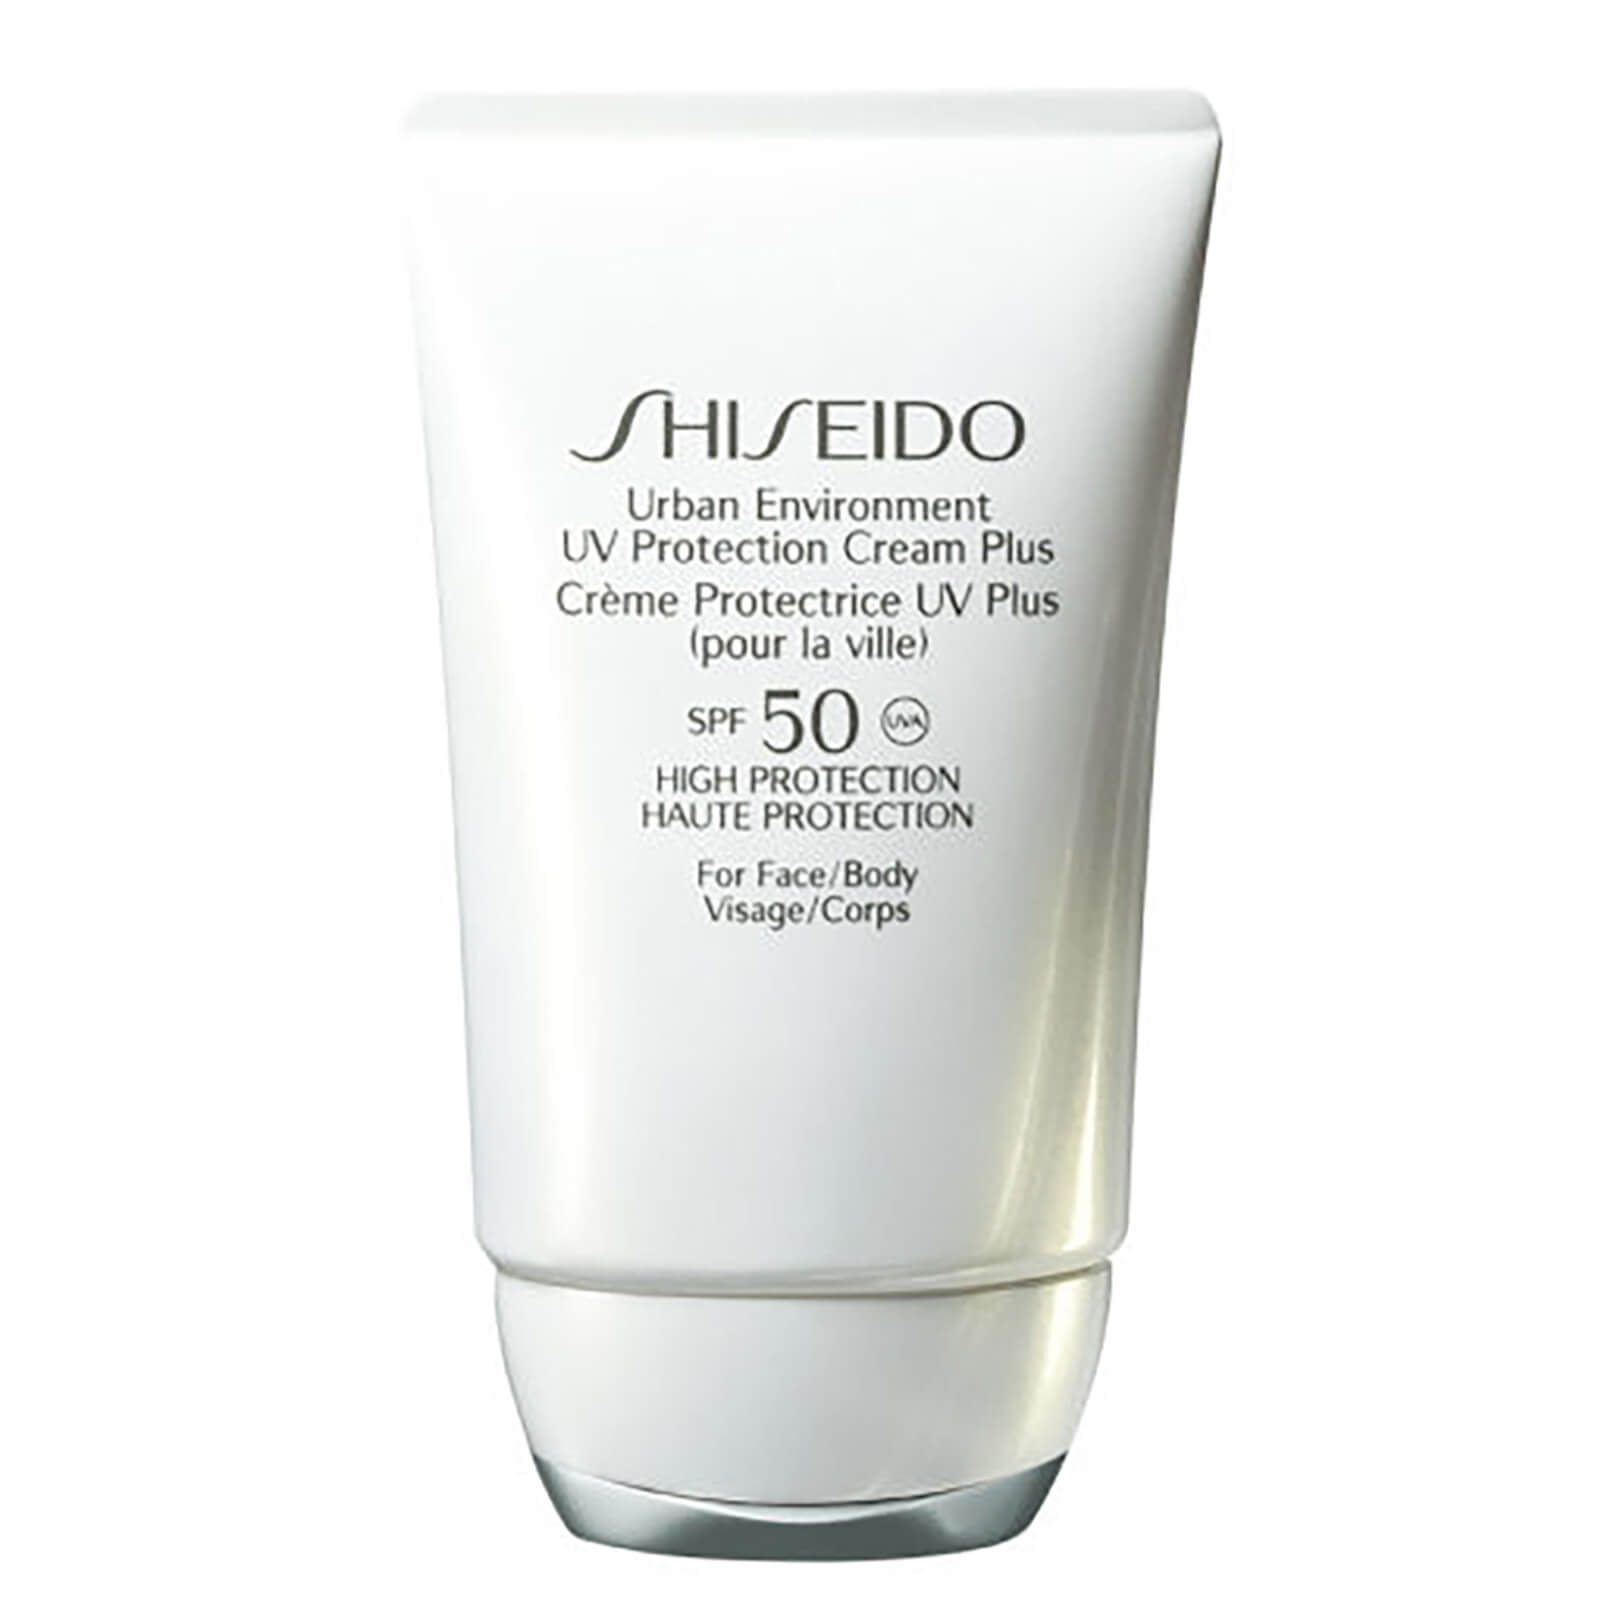 Urban Environment UV Protection Cream Plus SPF50 de Shiseido (50ml)